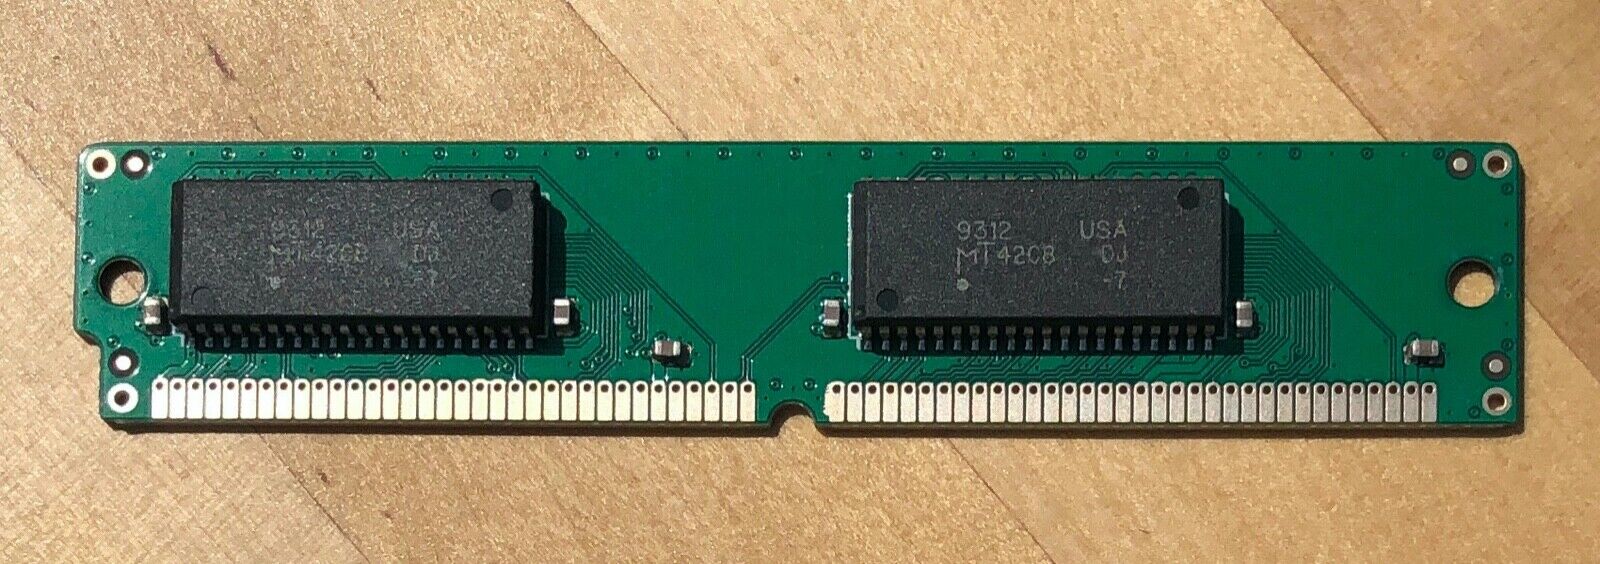 Garrett's Workshop 256 kB 68-pin VRAM SIMM for Macintosh 70 or 80 ns Made in USA